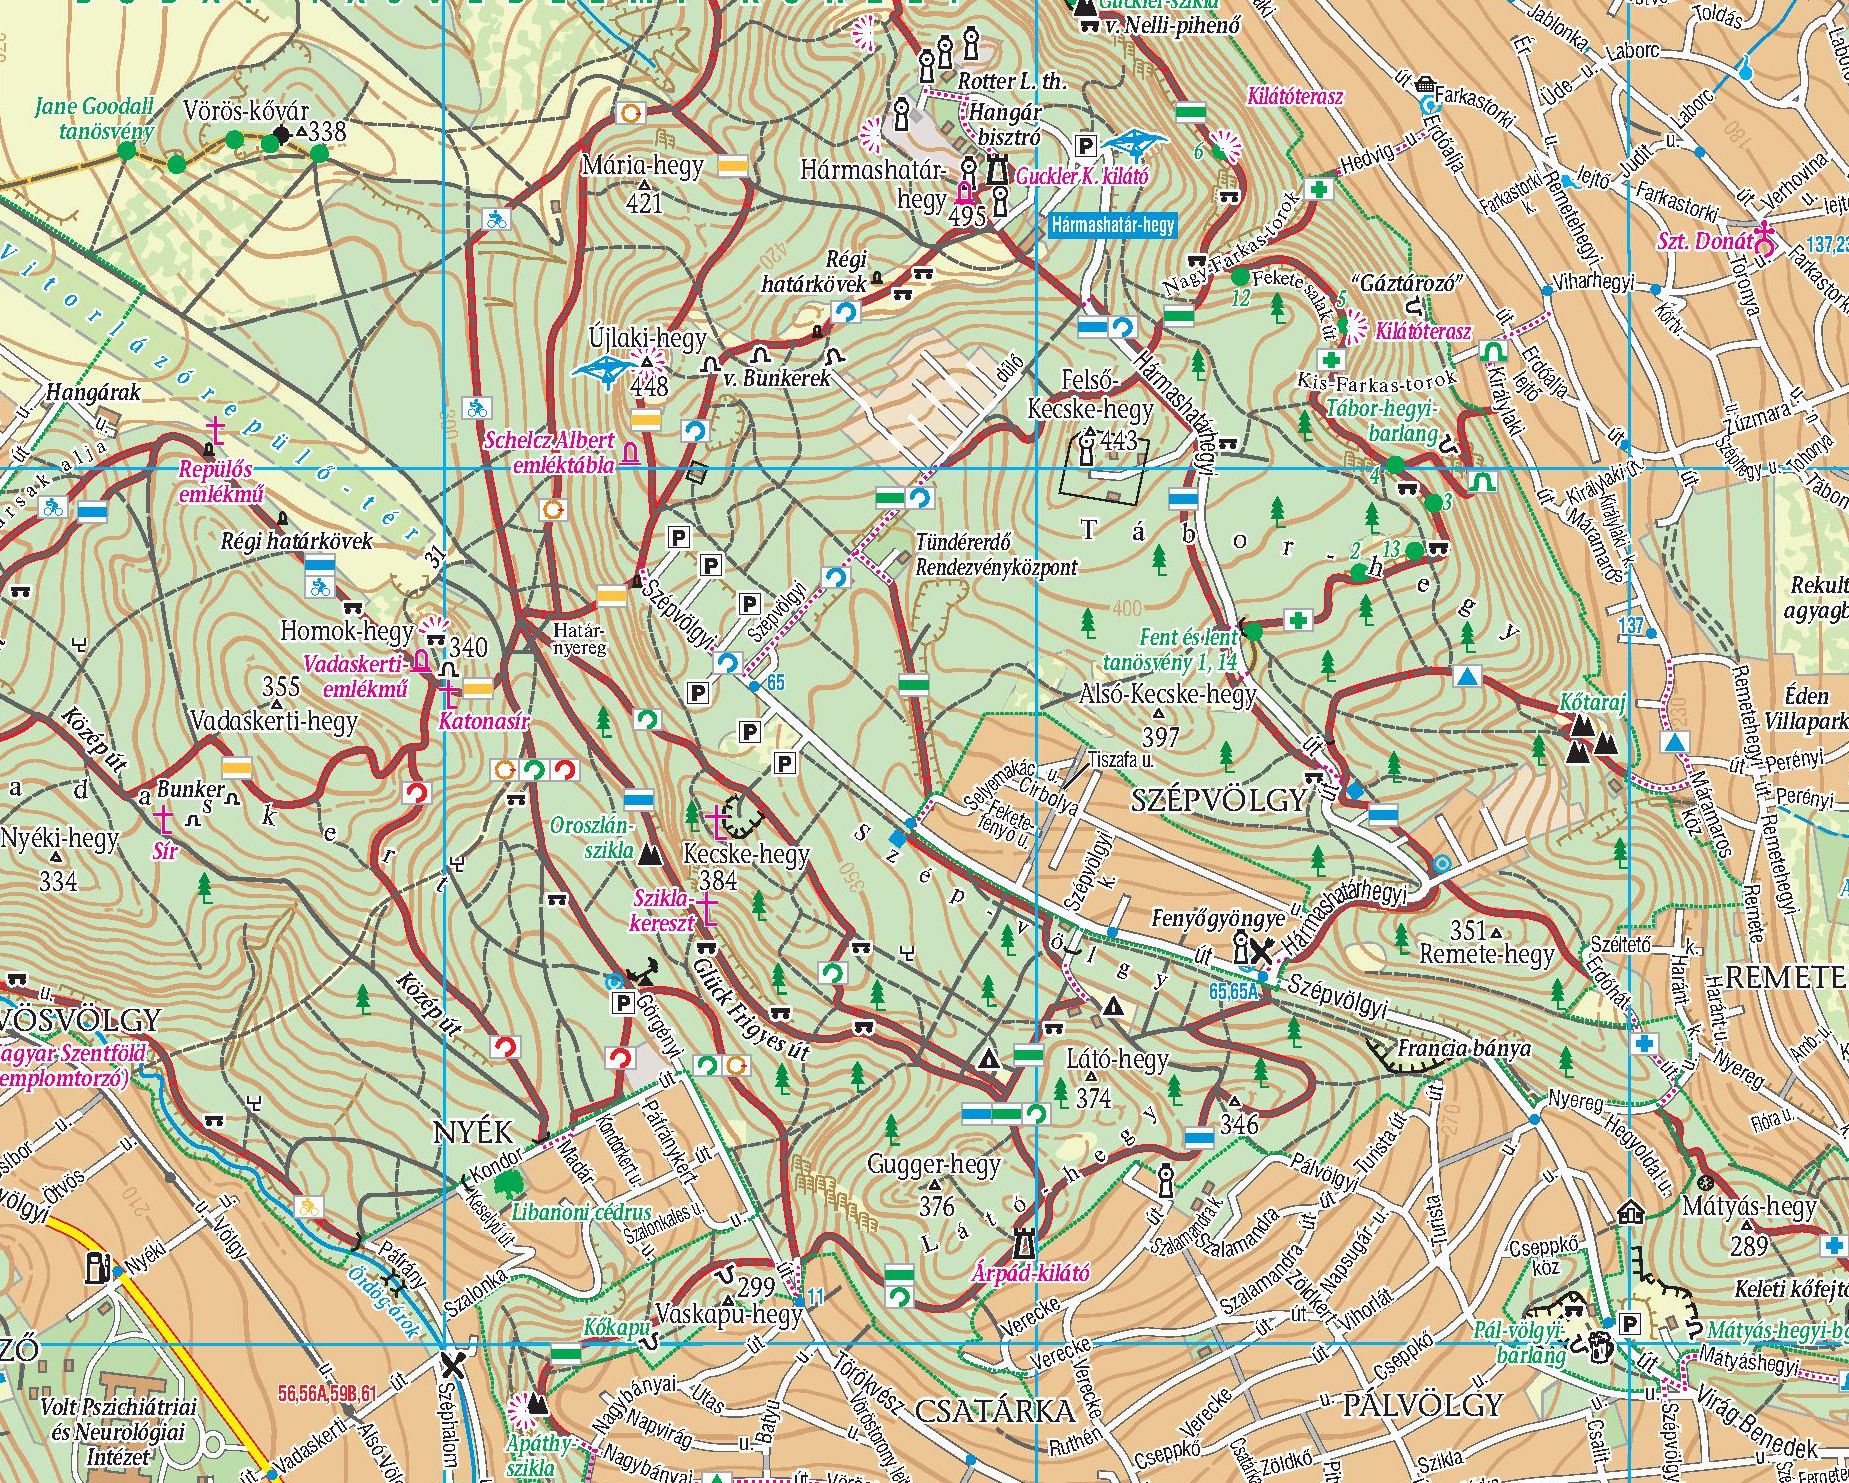 Buda hills 1:25.000 sample map